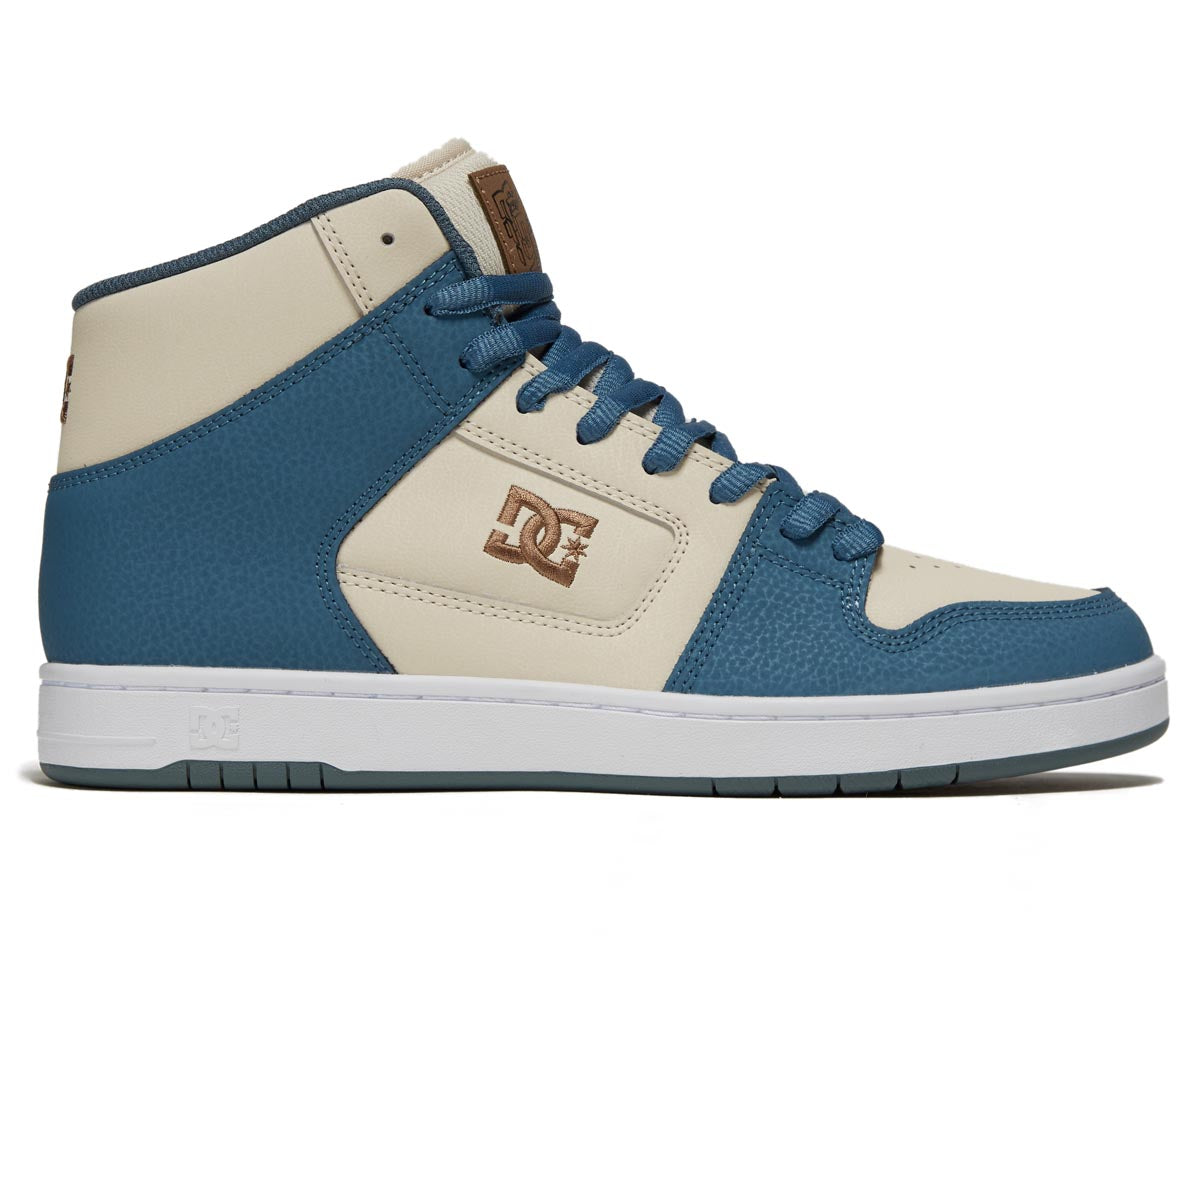 DC Manteca 4 Hi Shoes - Grey/Blue/White image 1